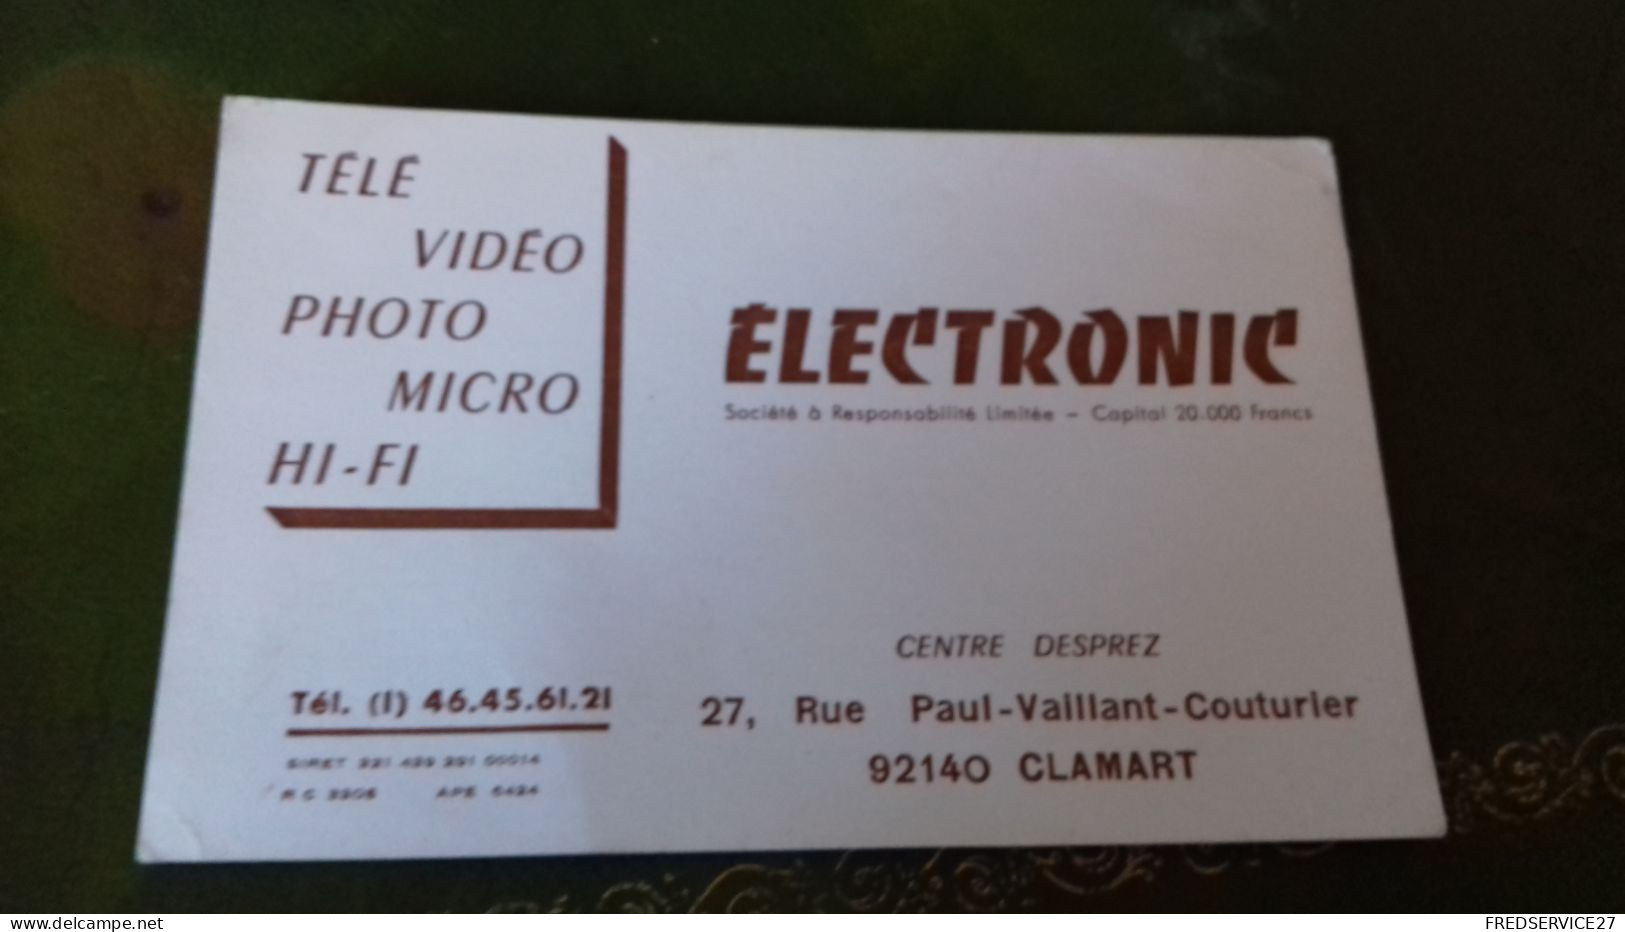 236/ CARTE DE VISITE ELECTRONIC CENTRE DESPRET CLAMART 92140 - Visitenkarten